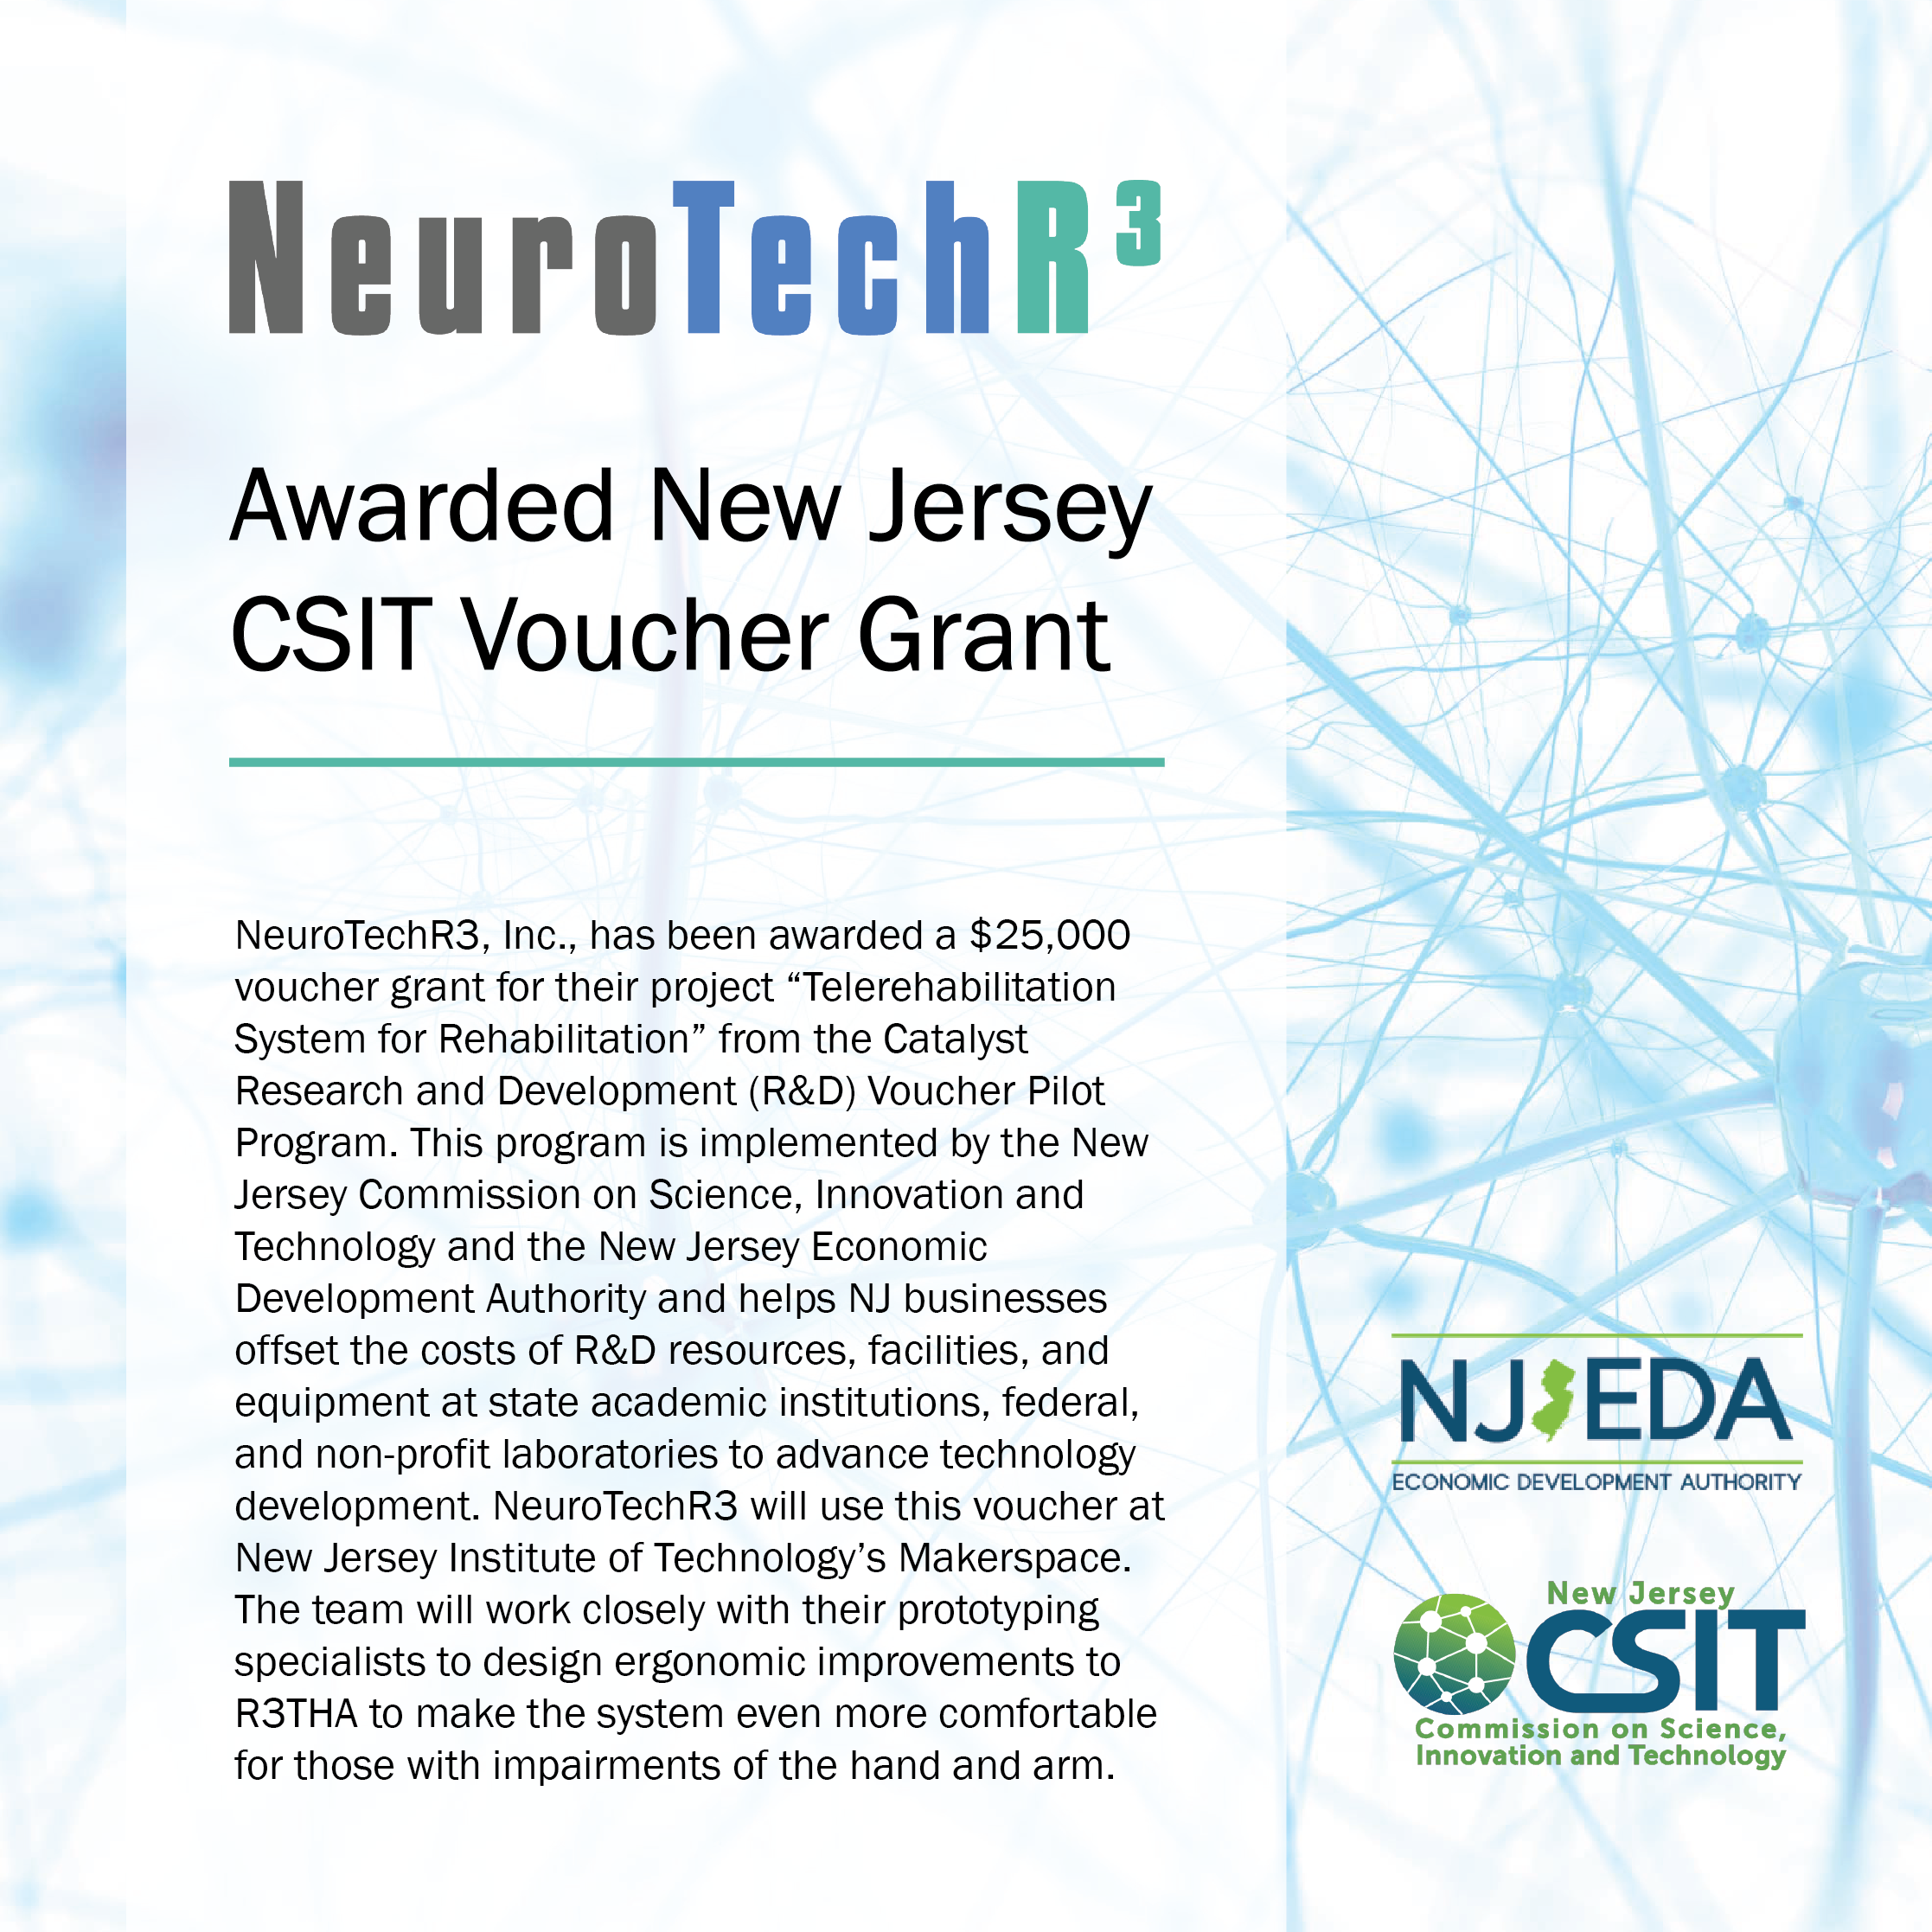 NeuroTechR3 Awarded New Jersey CSIT Voucher Grant